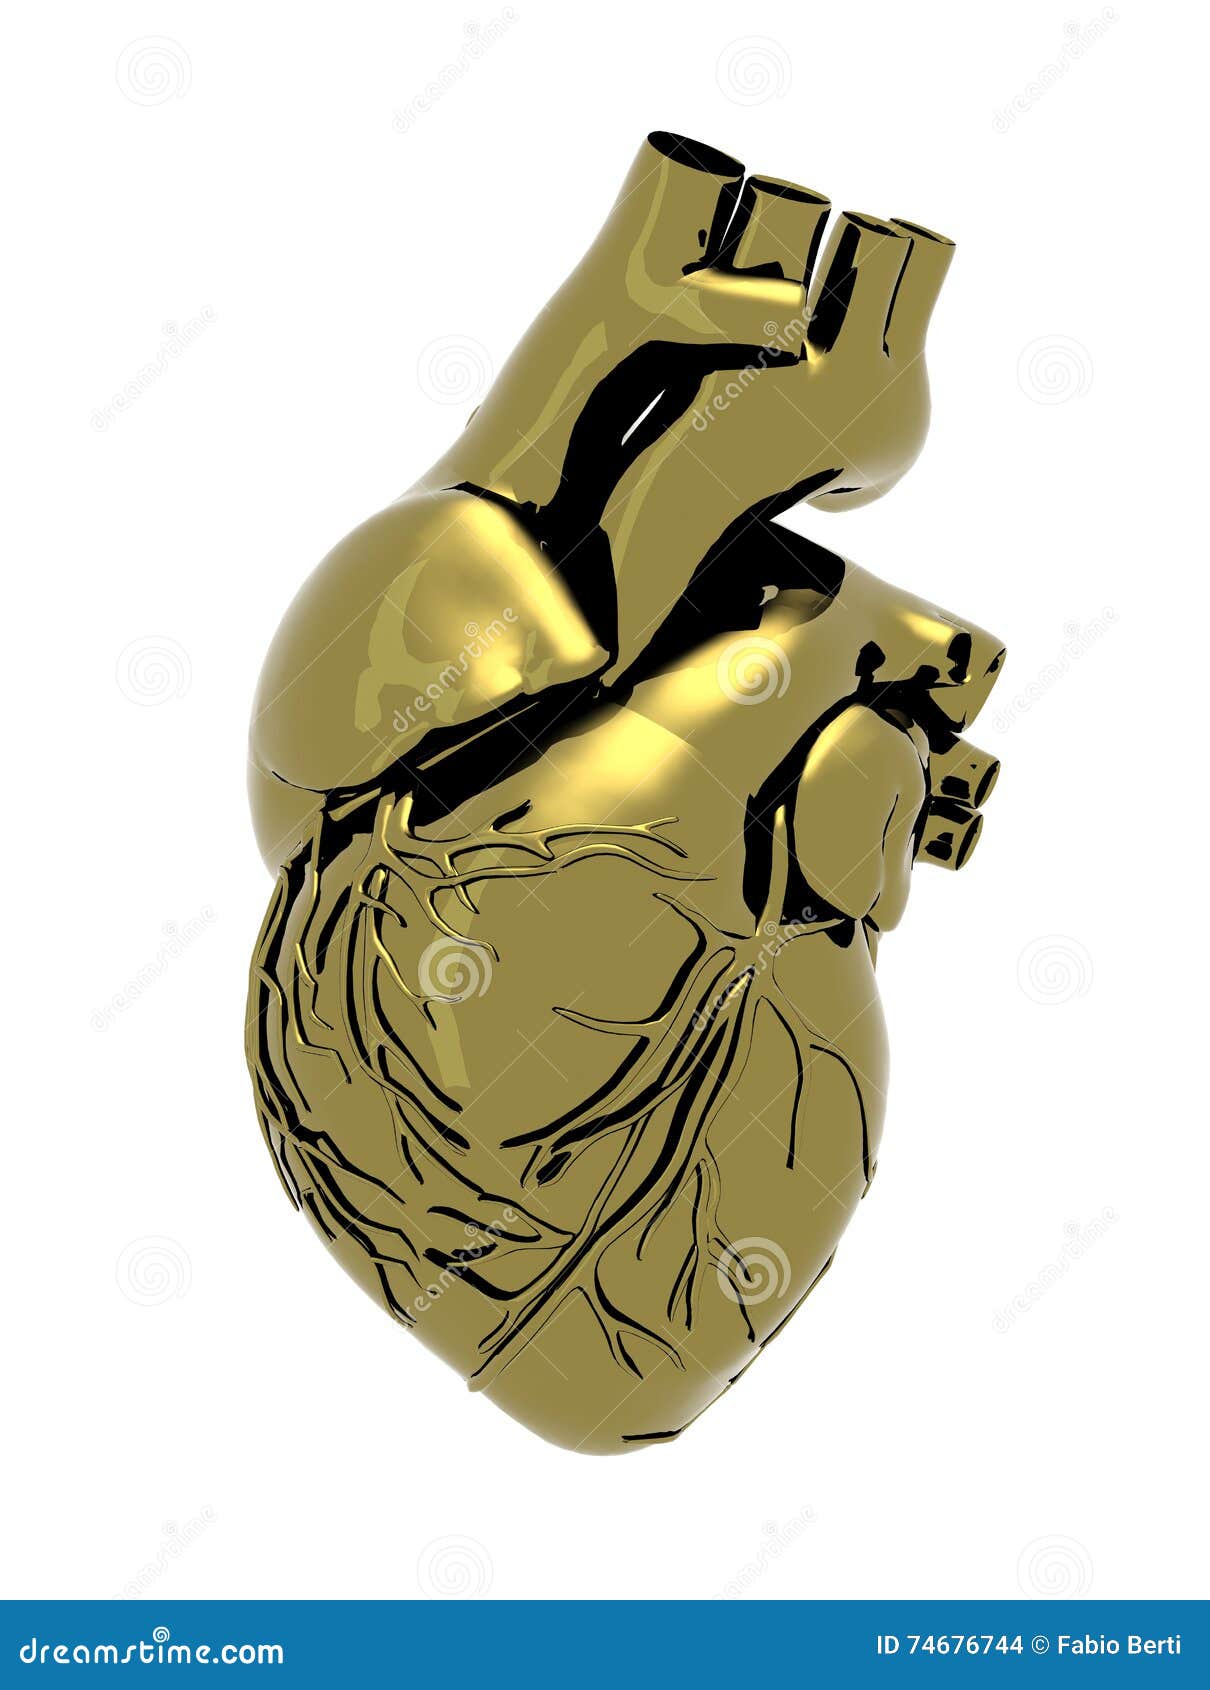 6,888 Metal Human Heart Images, Stock Photos, 3D objects, & Vectors